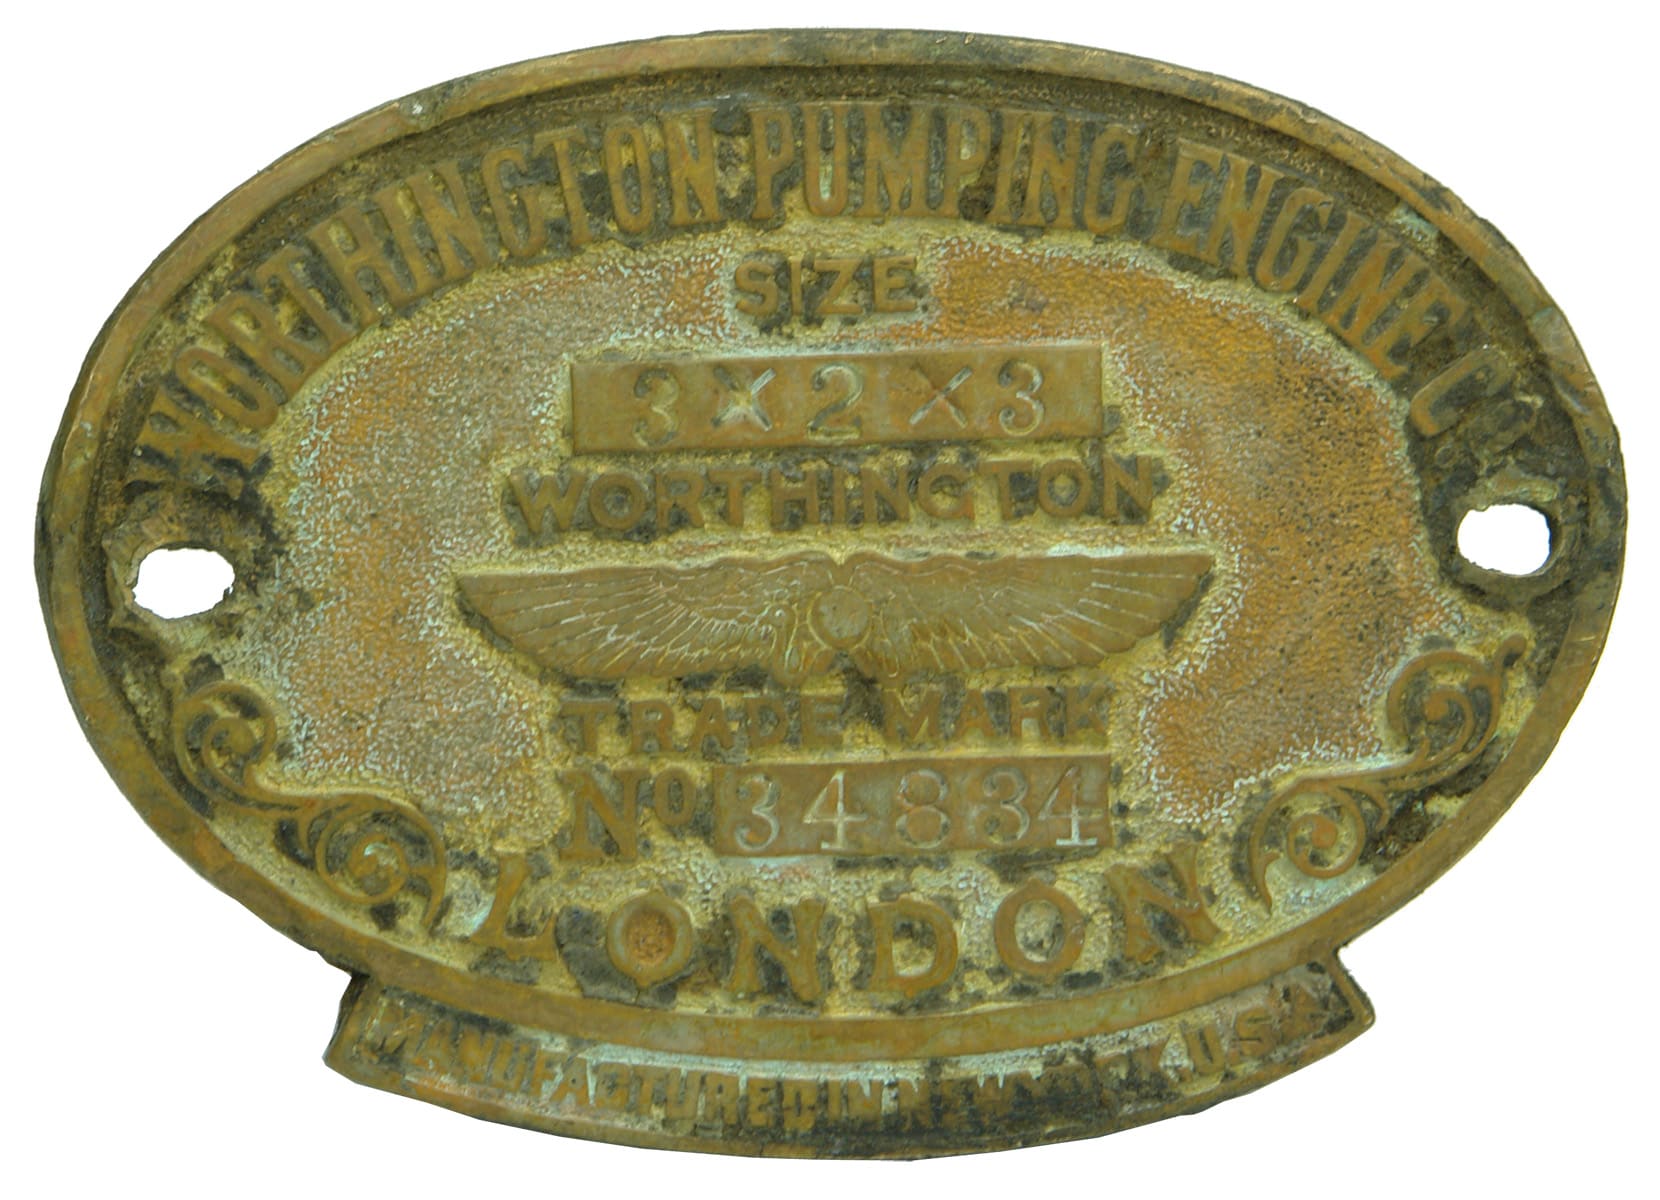 Worthington Pumping Engine Brass Name Plaque